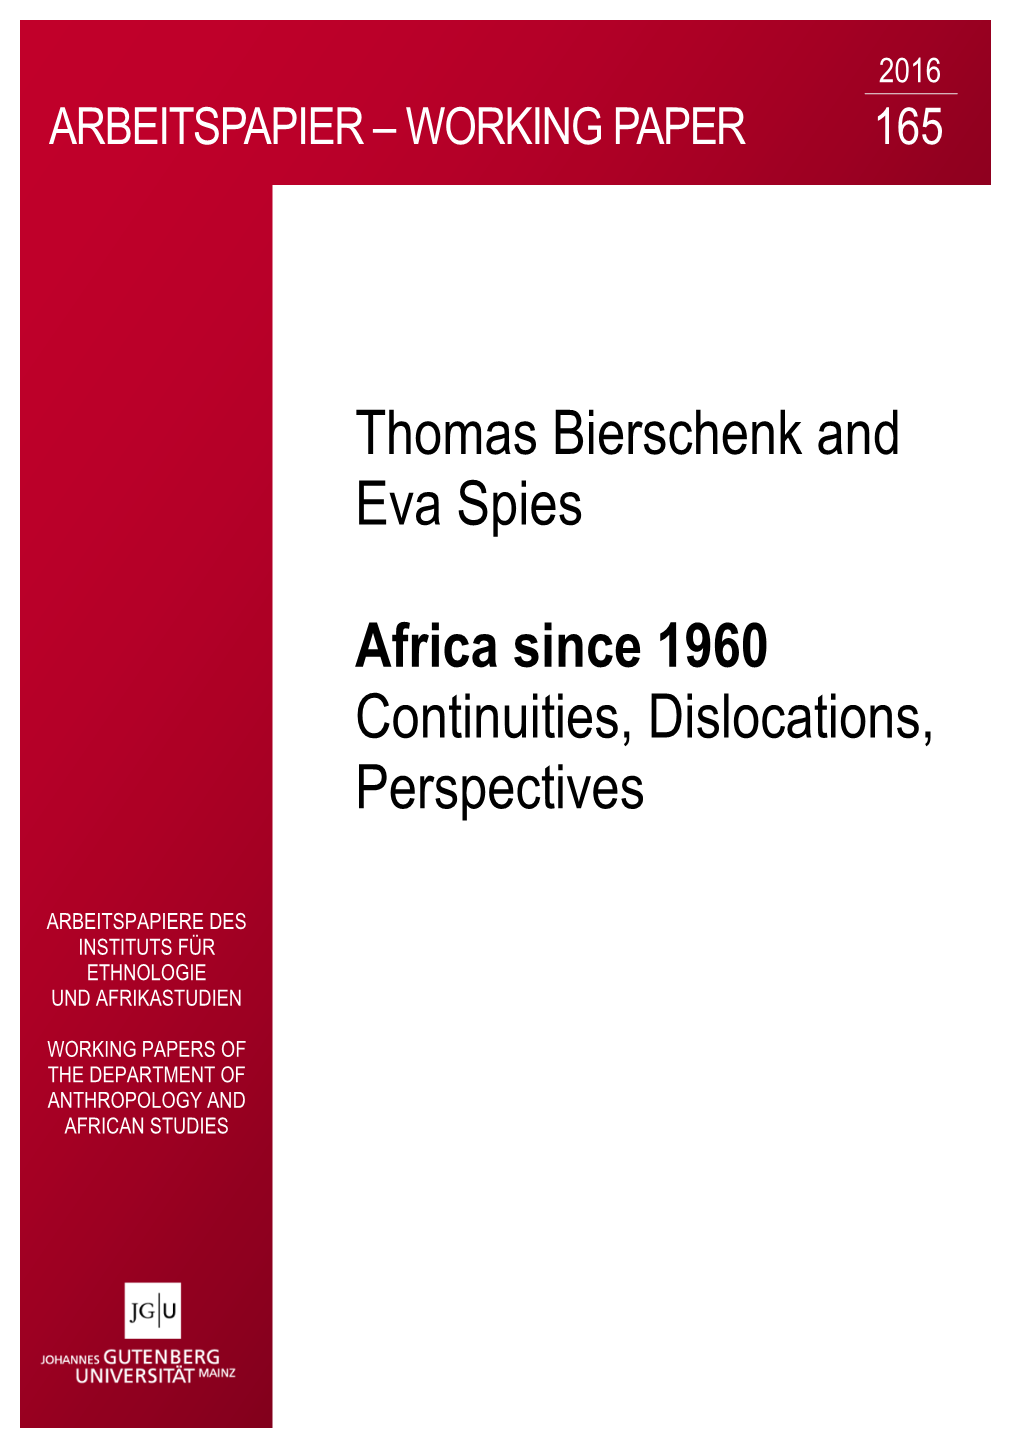 Thomas Bierschenk and Eva Spies Africa Since 1960 Continuities